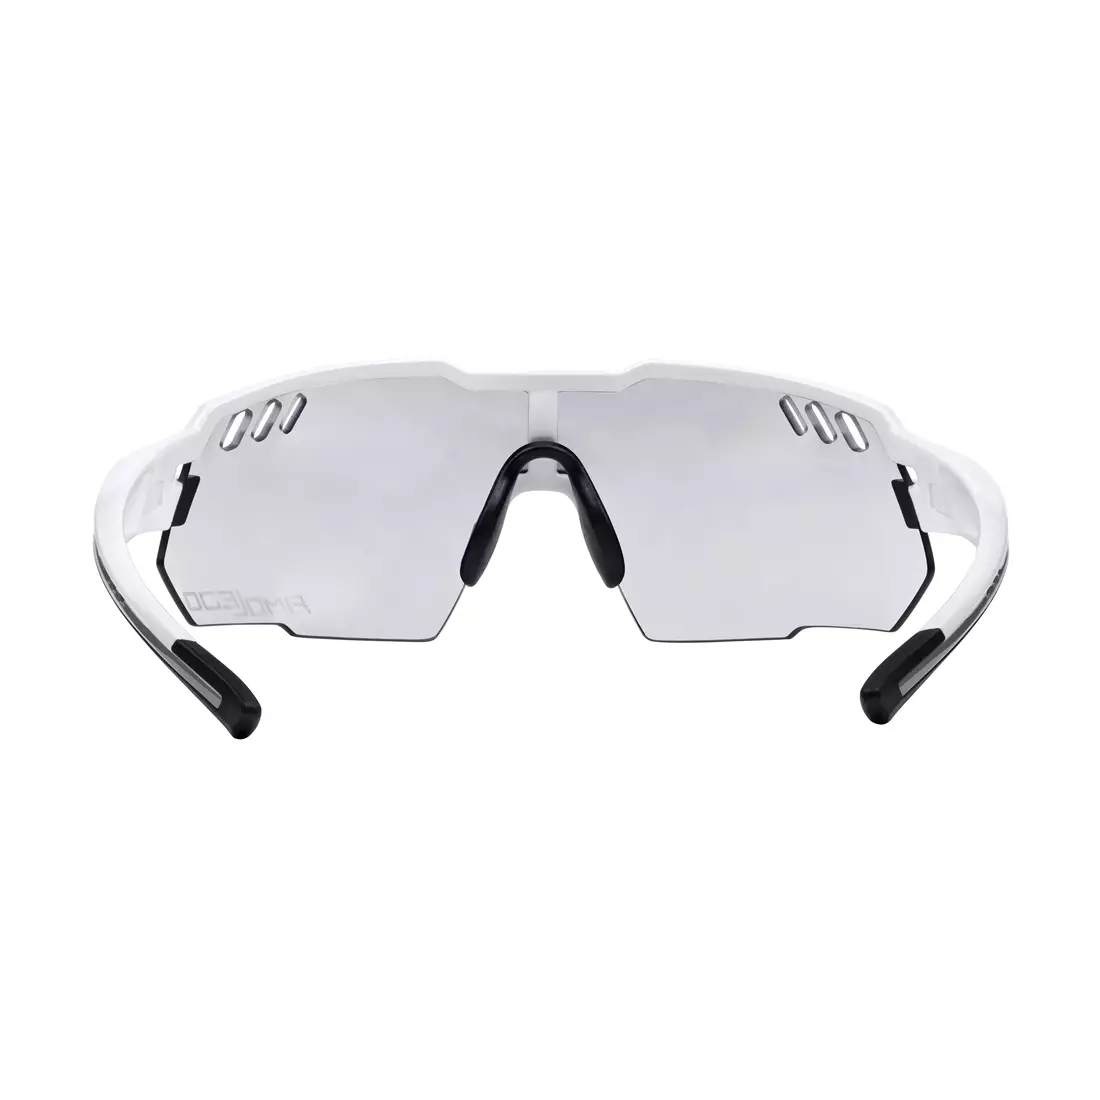 FORCE sportbrille AMOLEDO Photochrom, schwarz und grau, 910882